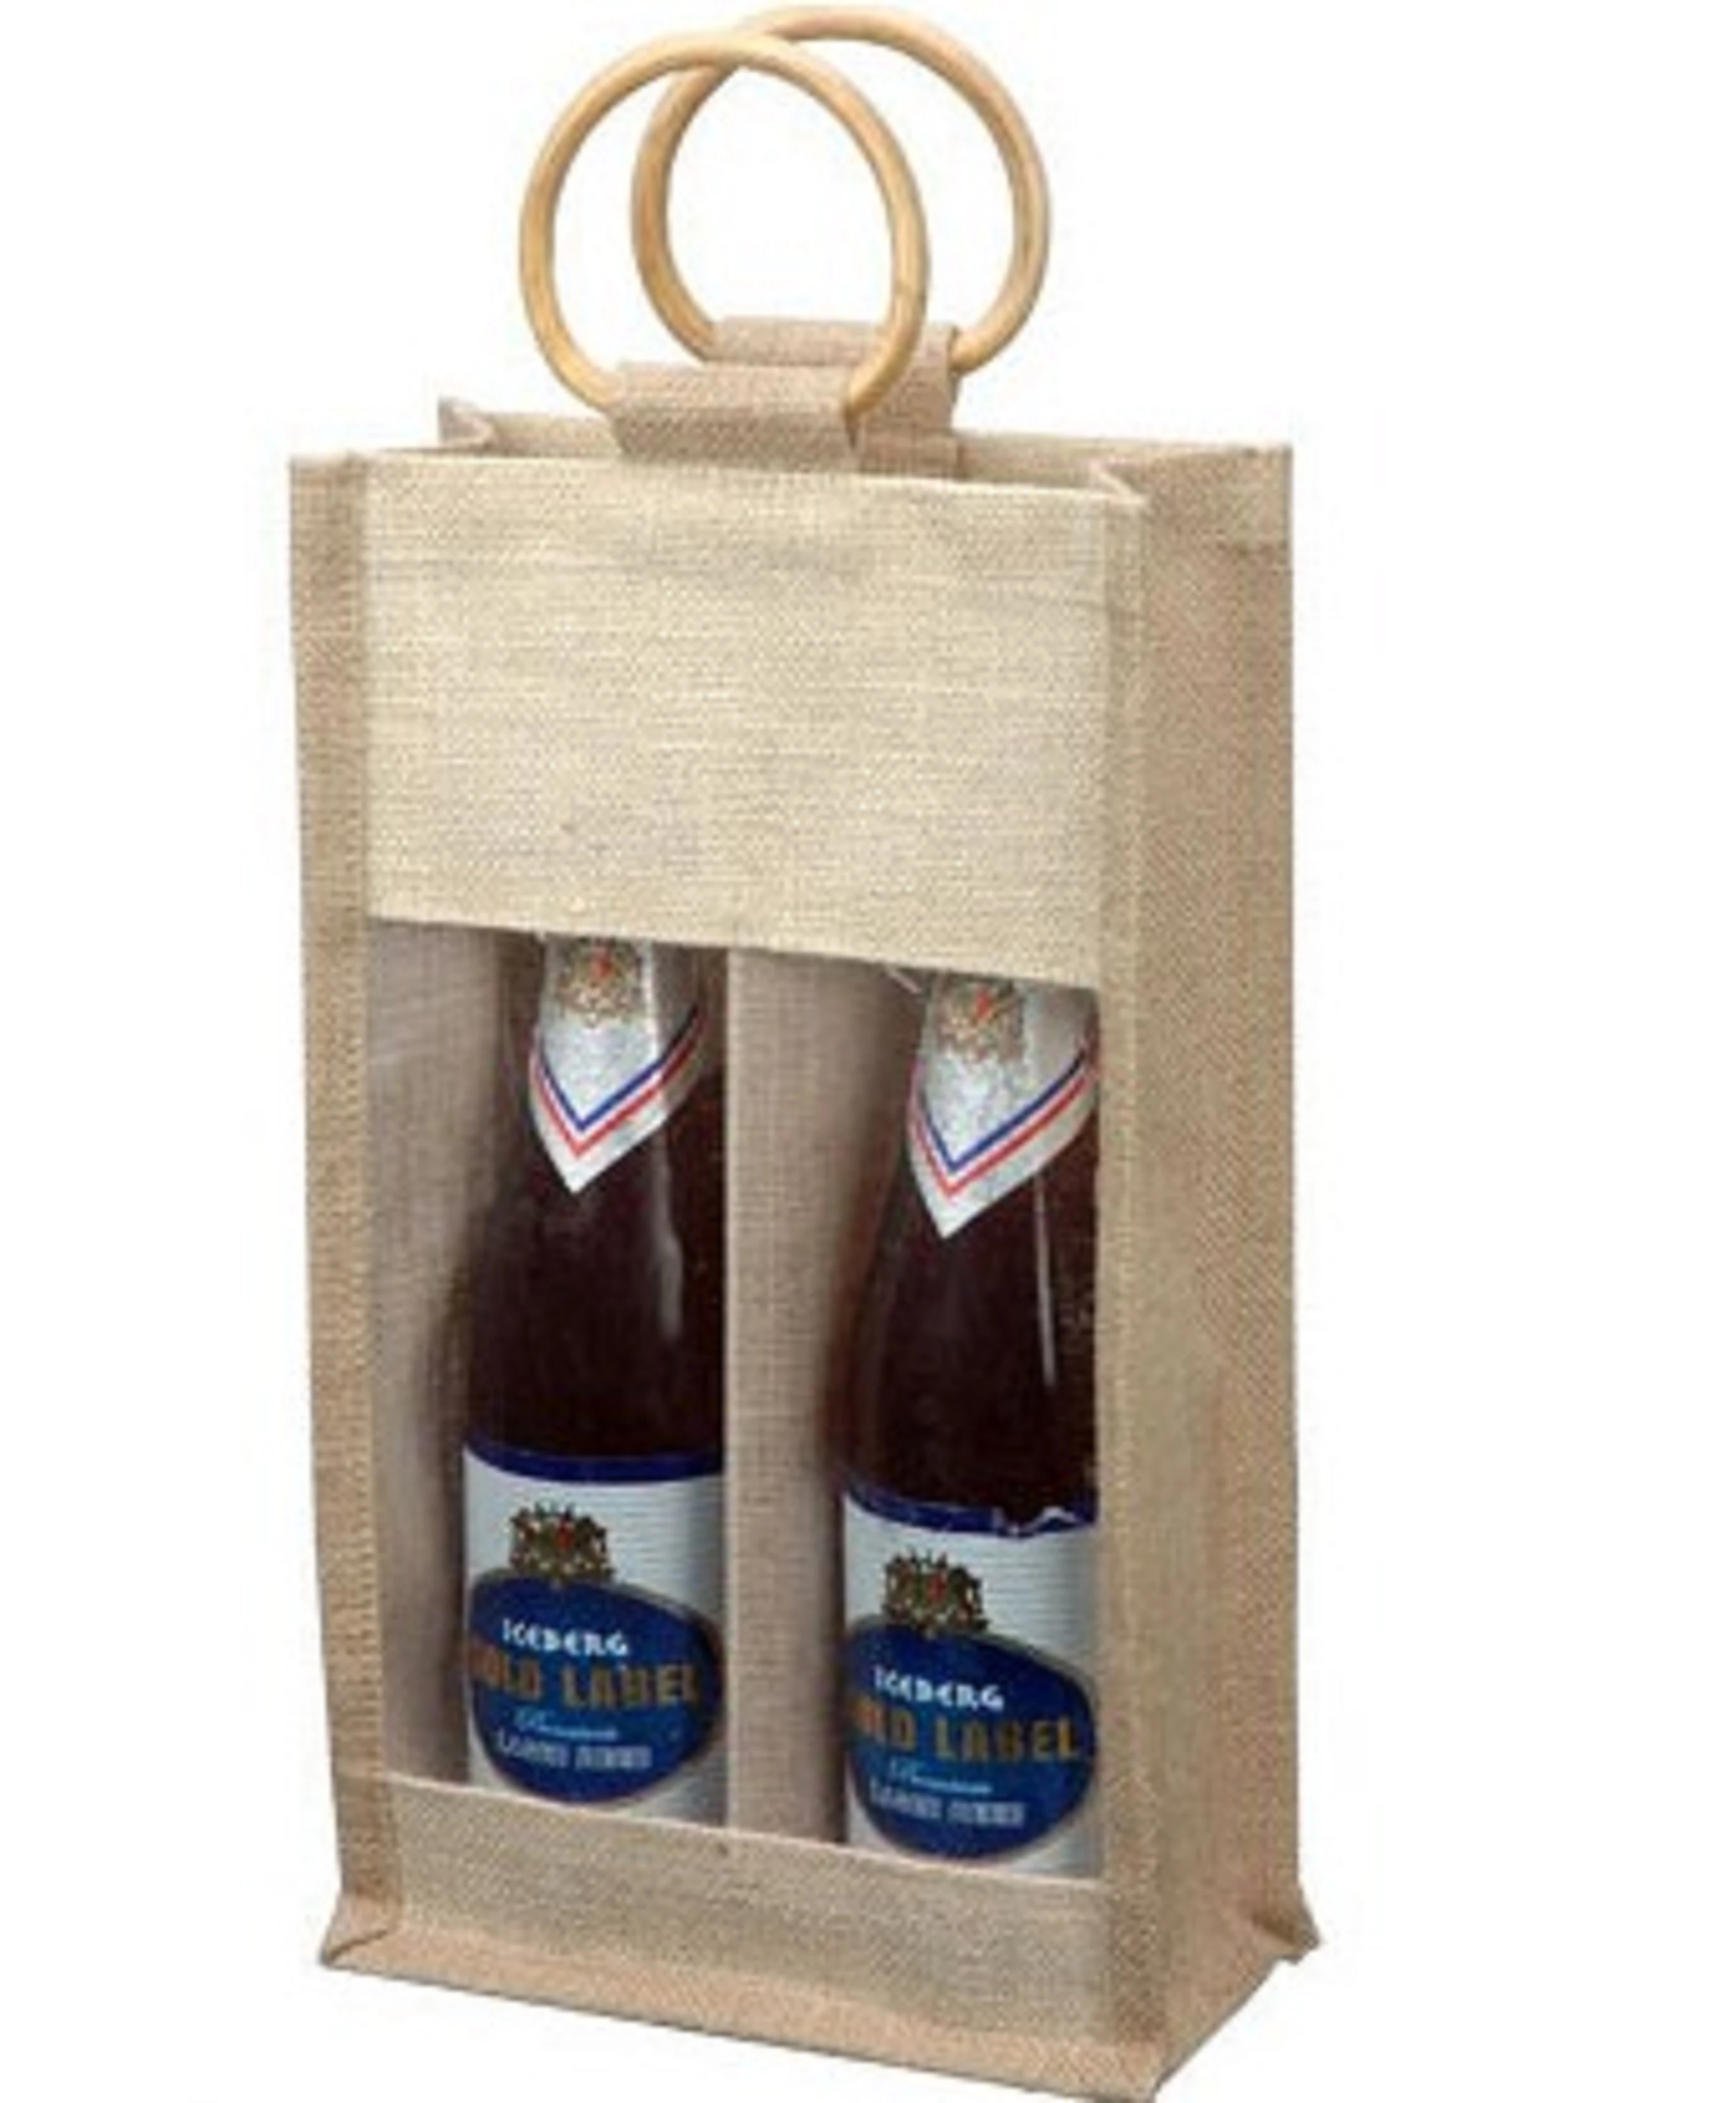 4 bottle jute bag in Jute laminated fabic 2021 lalest trendy fancy reusable